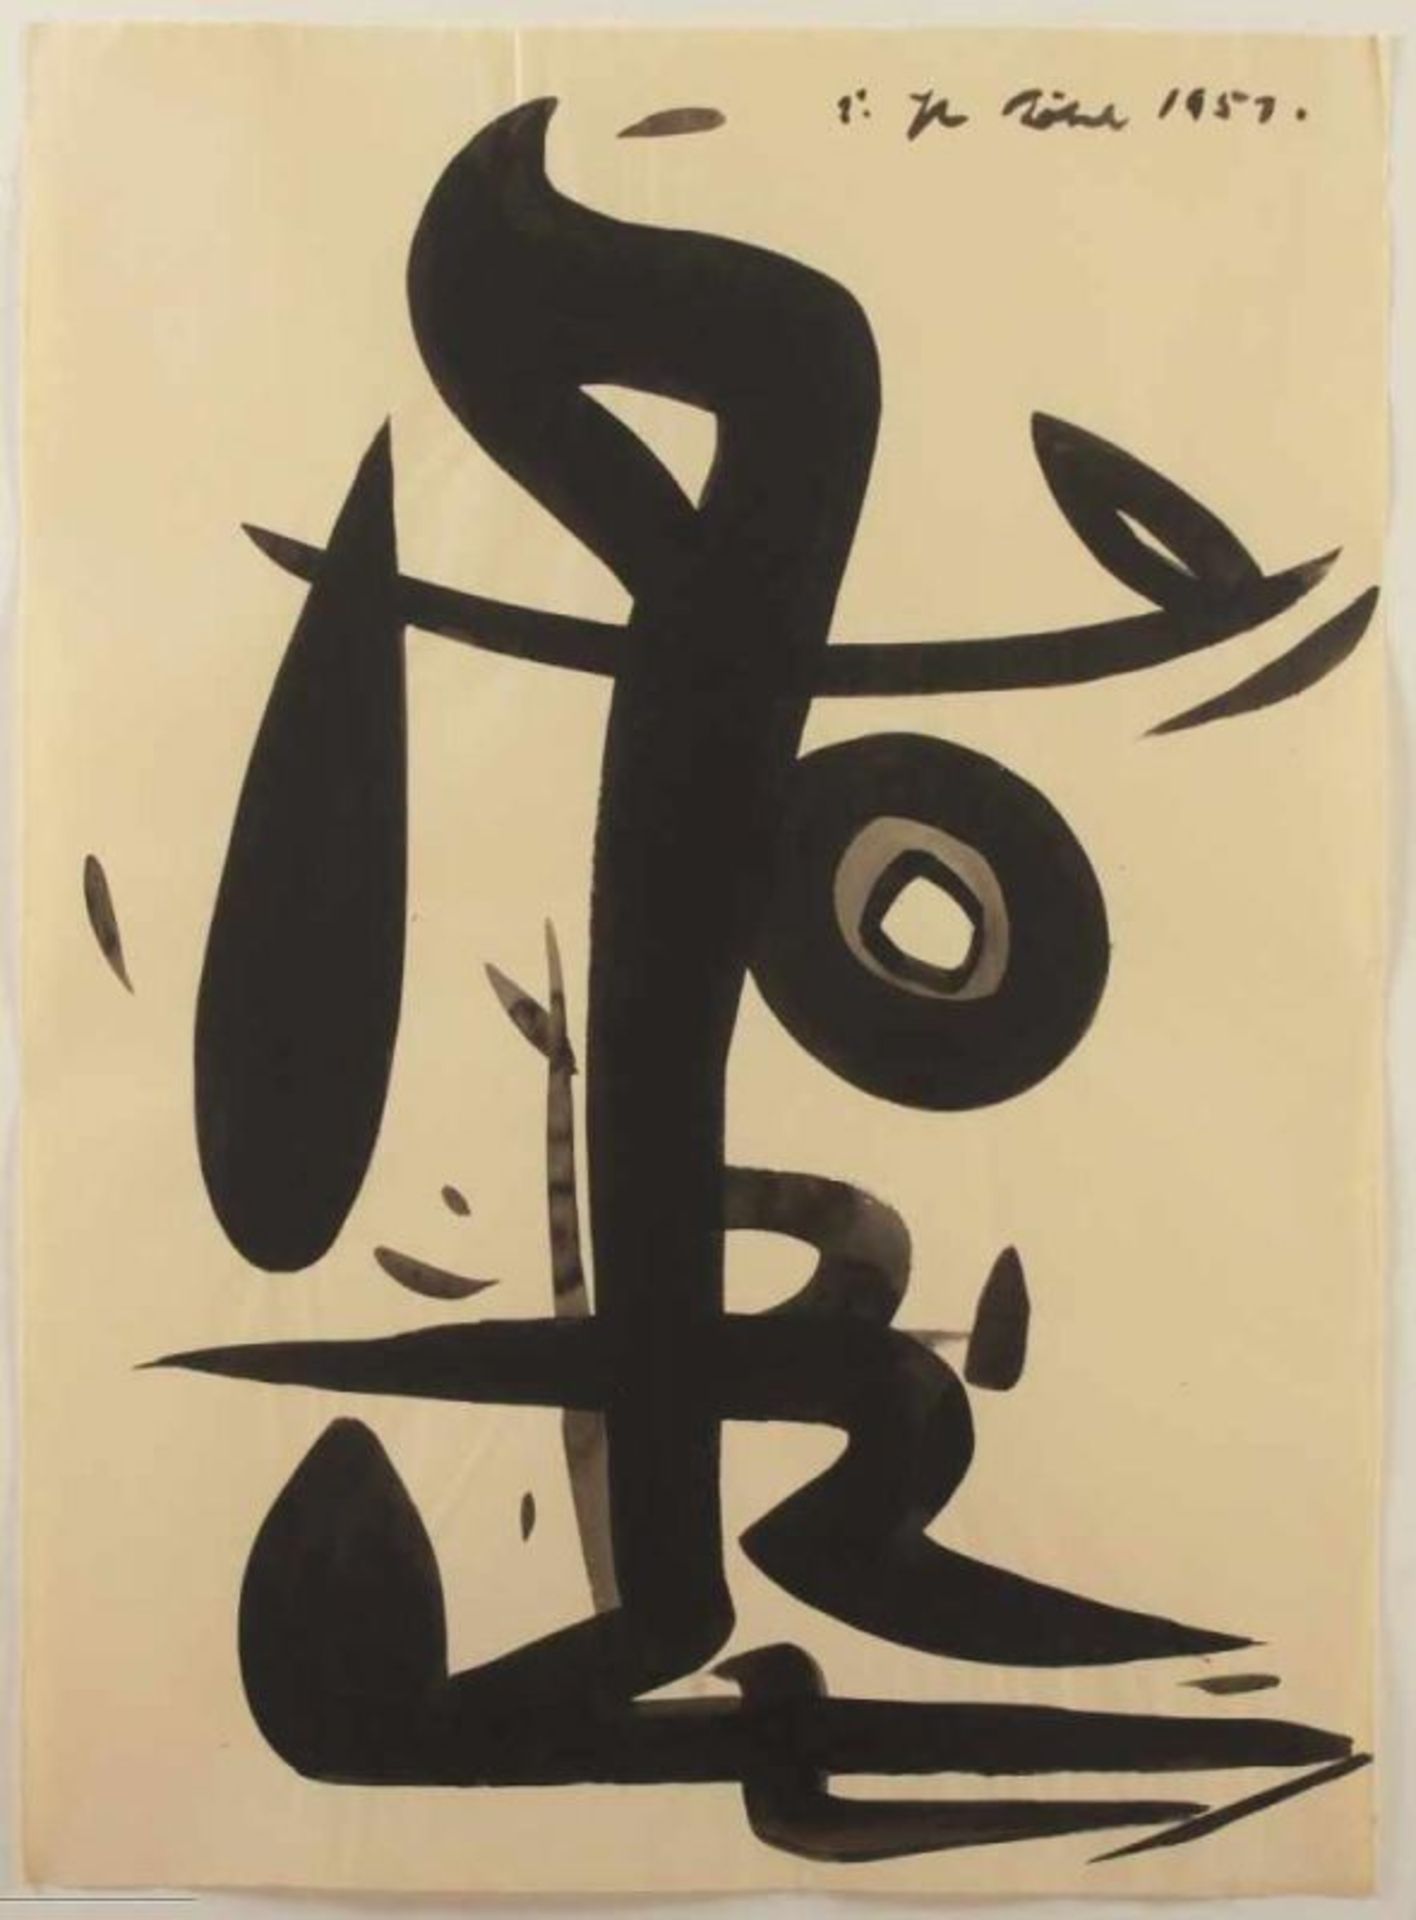 RÖHL, Peter, "Abstrakte Komposition", Tinte, Pinsel/Papier, 65 x 48, oben rechts signiert und